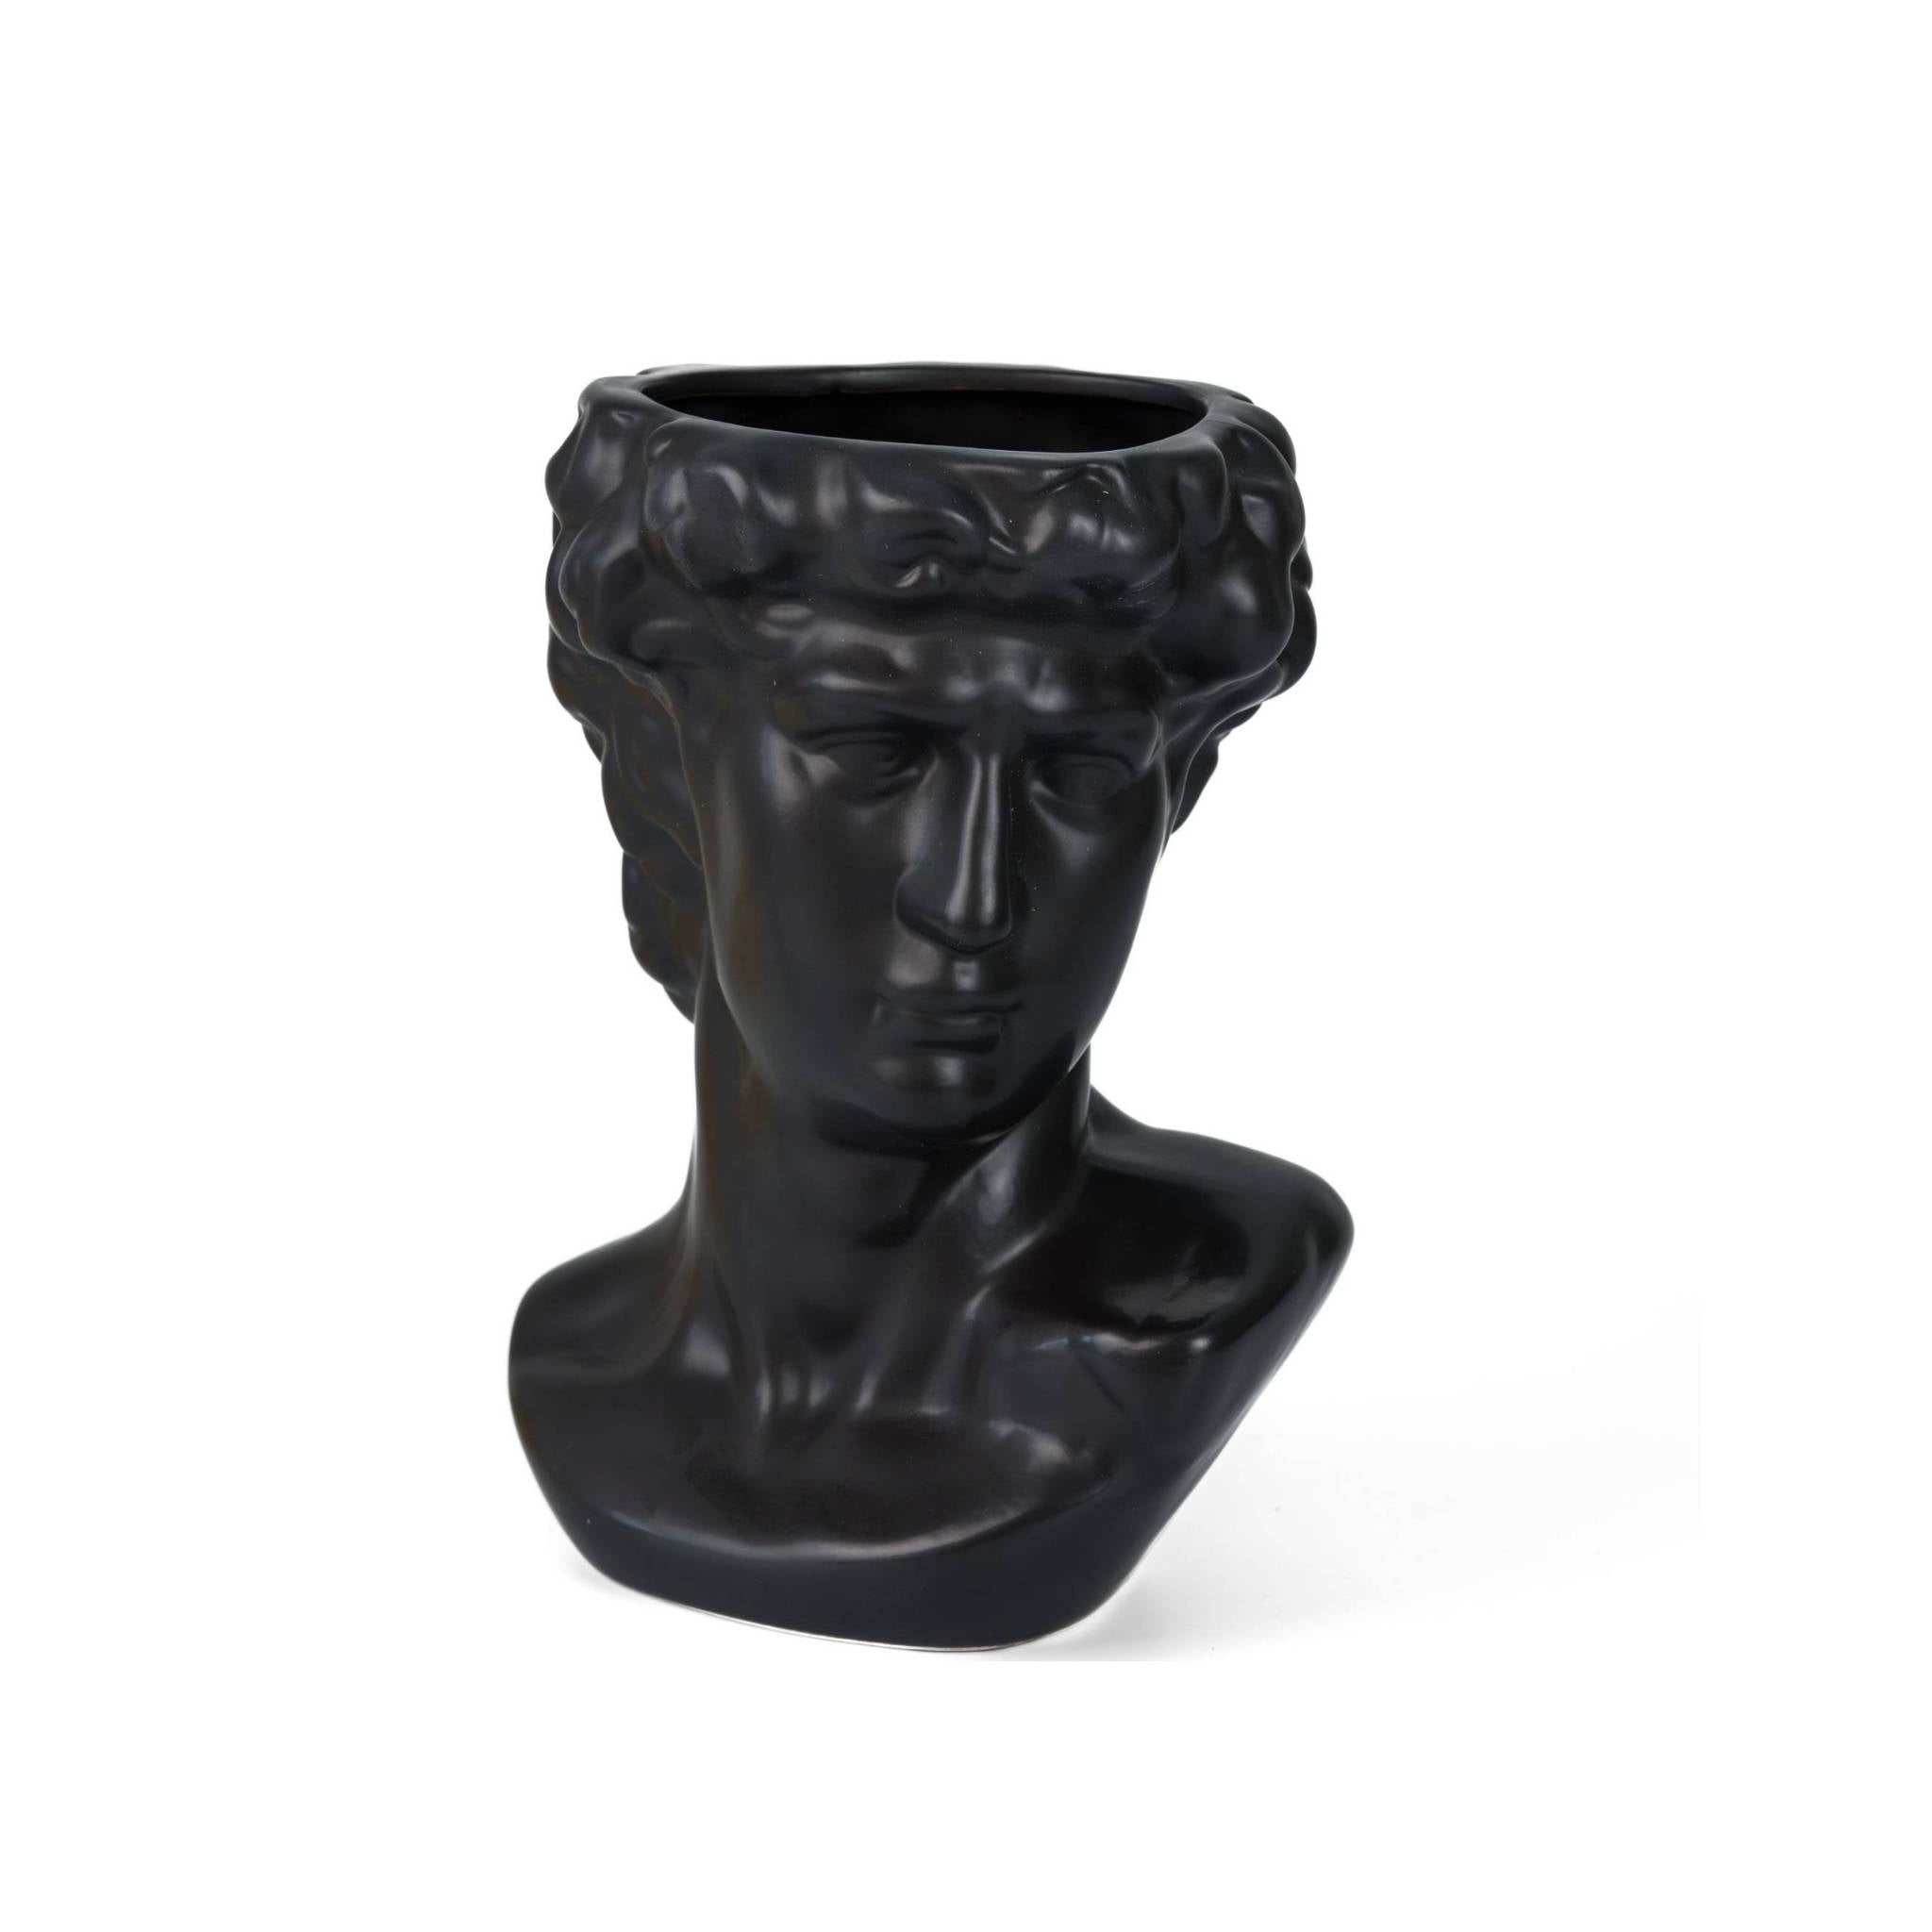 Large Greek Head Vase/Planter - Black